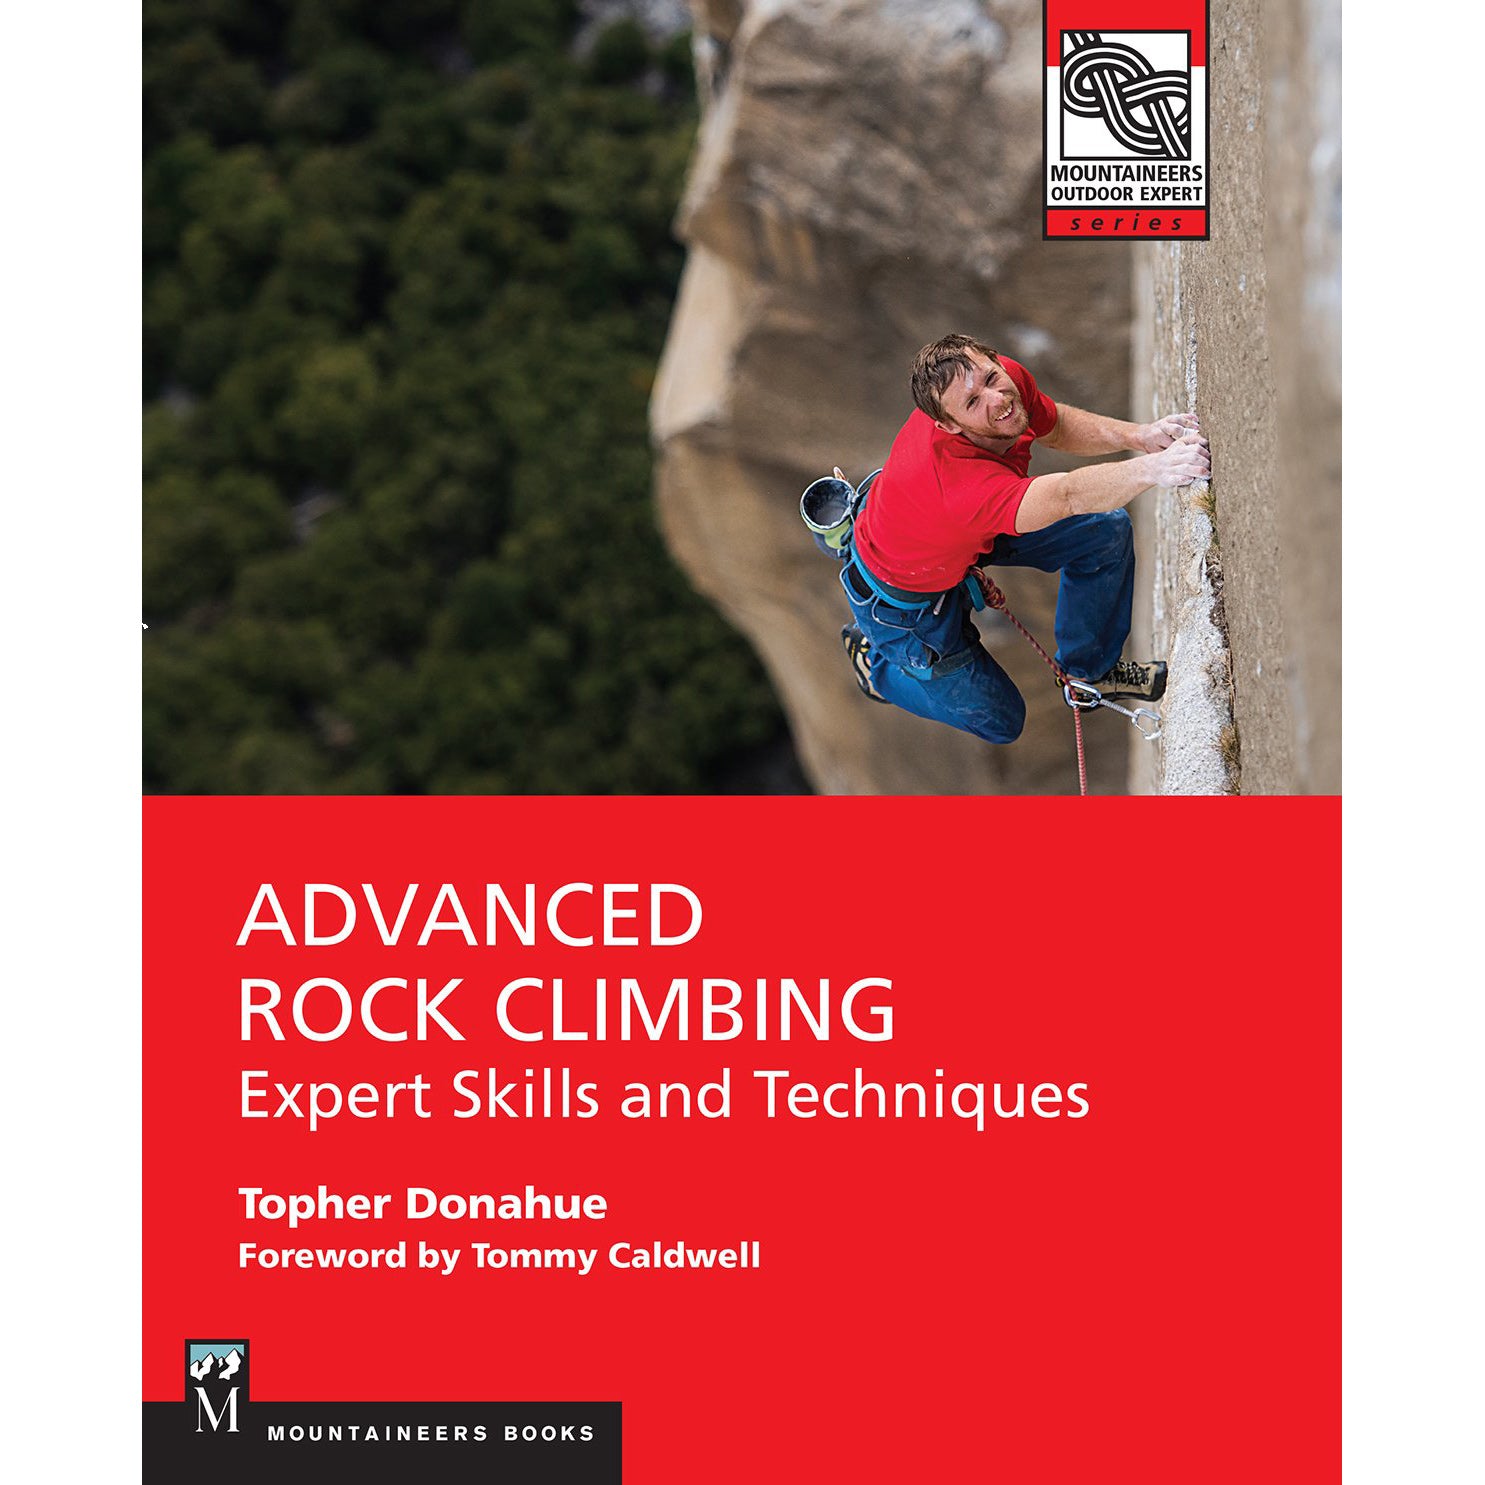 advanced rock climbing: expert skills and techniques